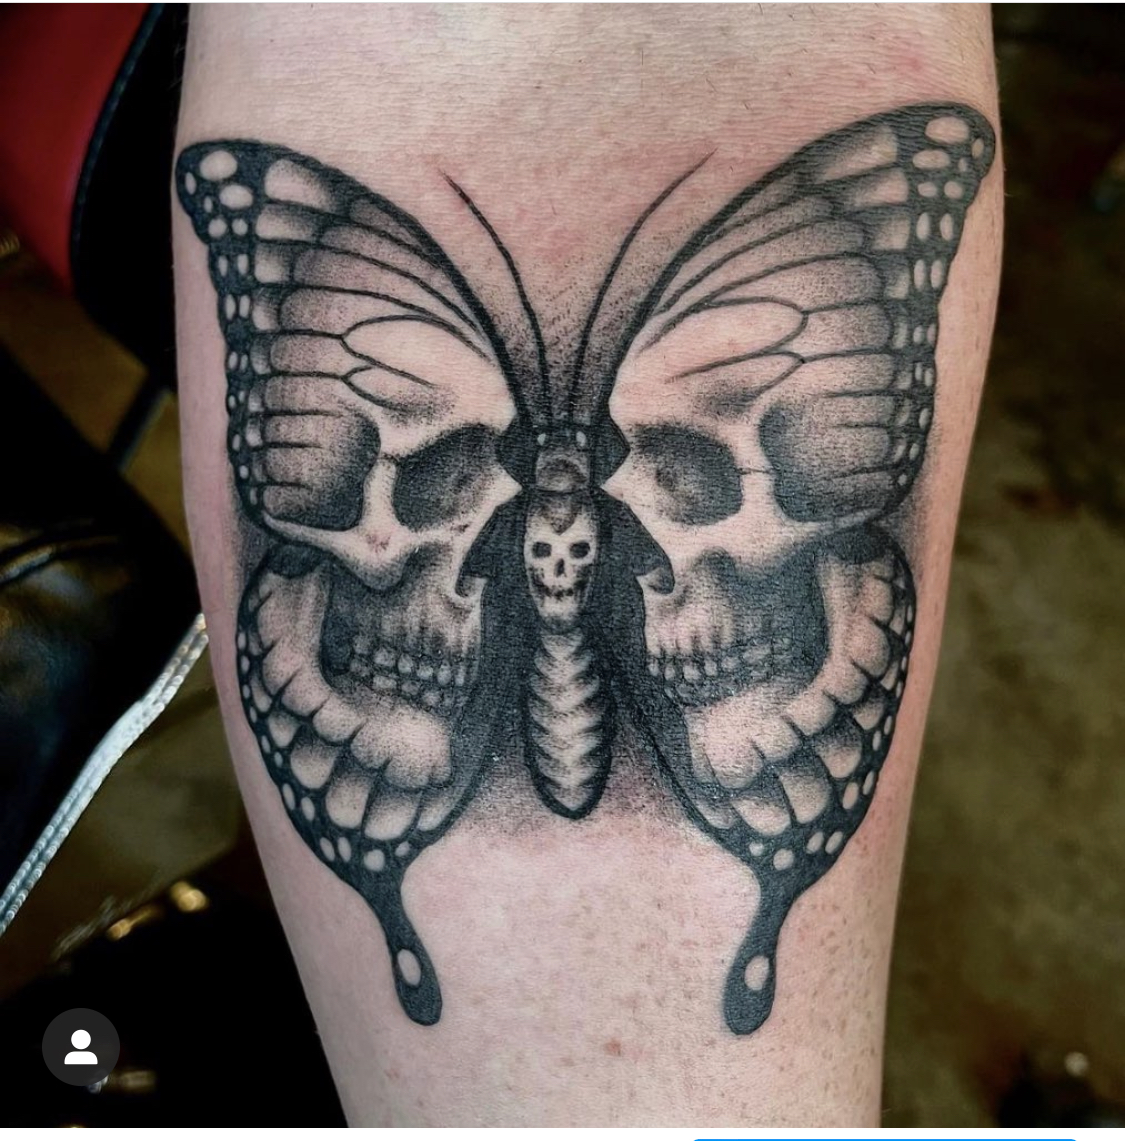 Skull butterfly tattoo by artist Jake Johnson.